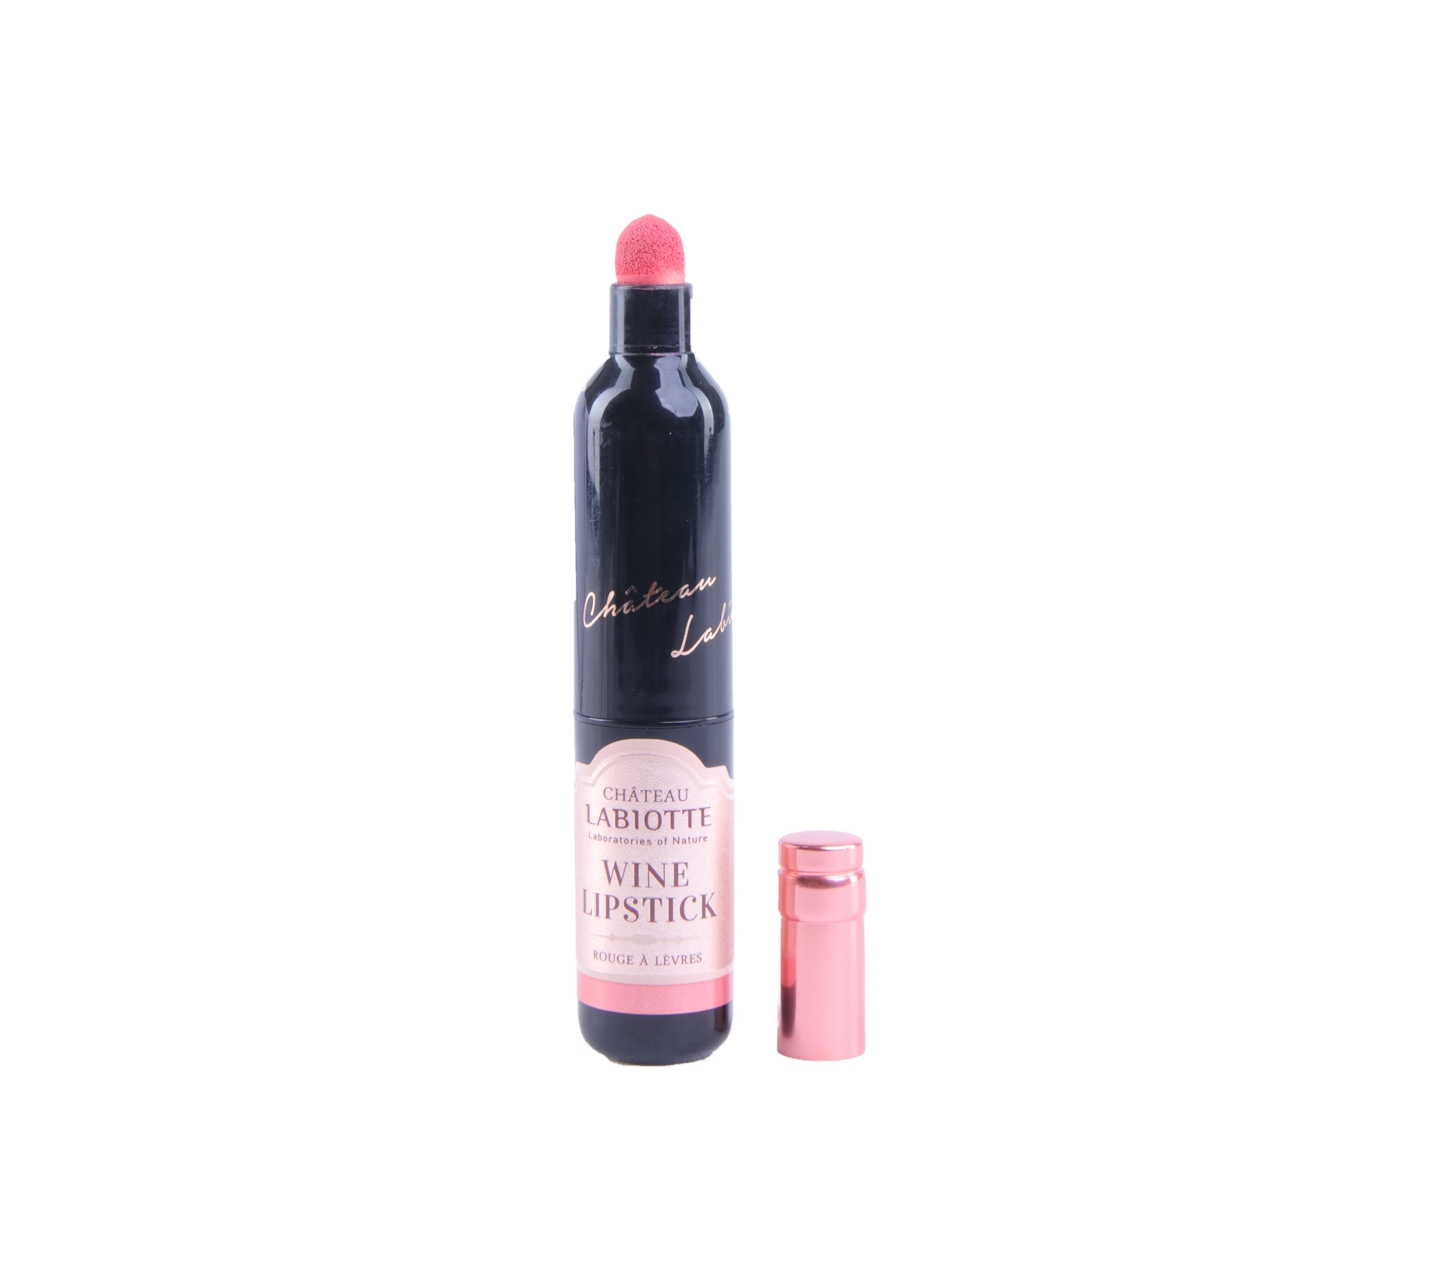 Chateau Labiotte Wine Lipstick Melting BE01 Lips